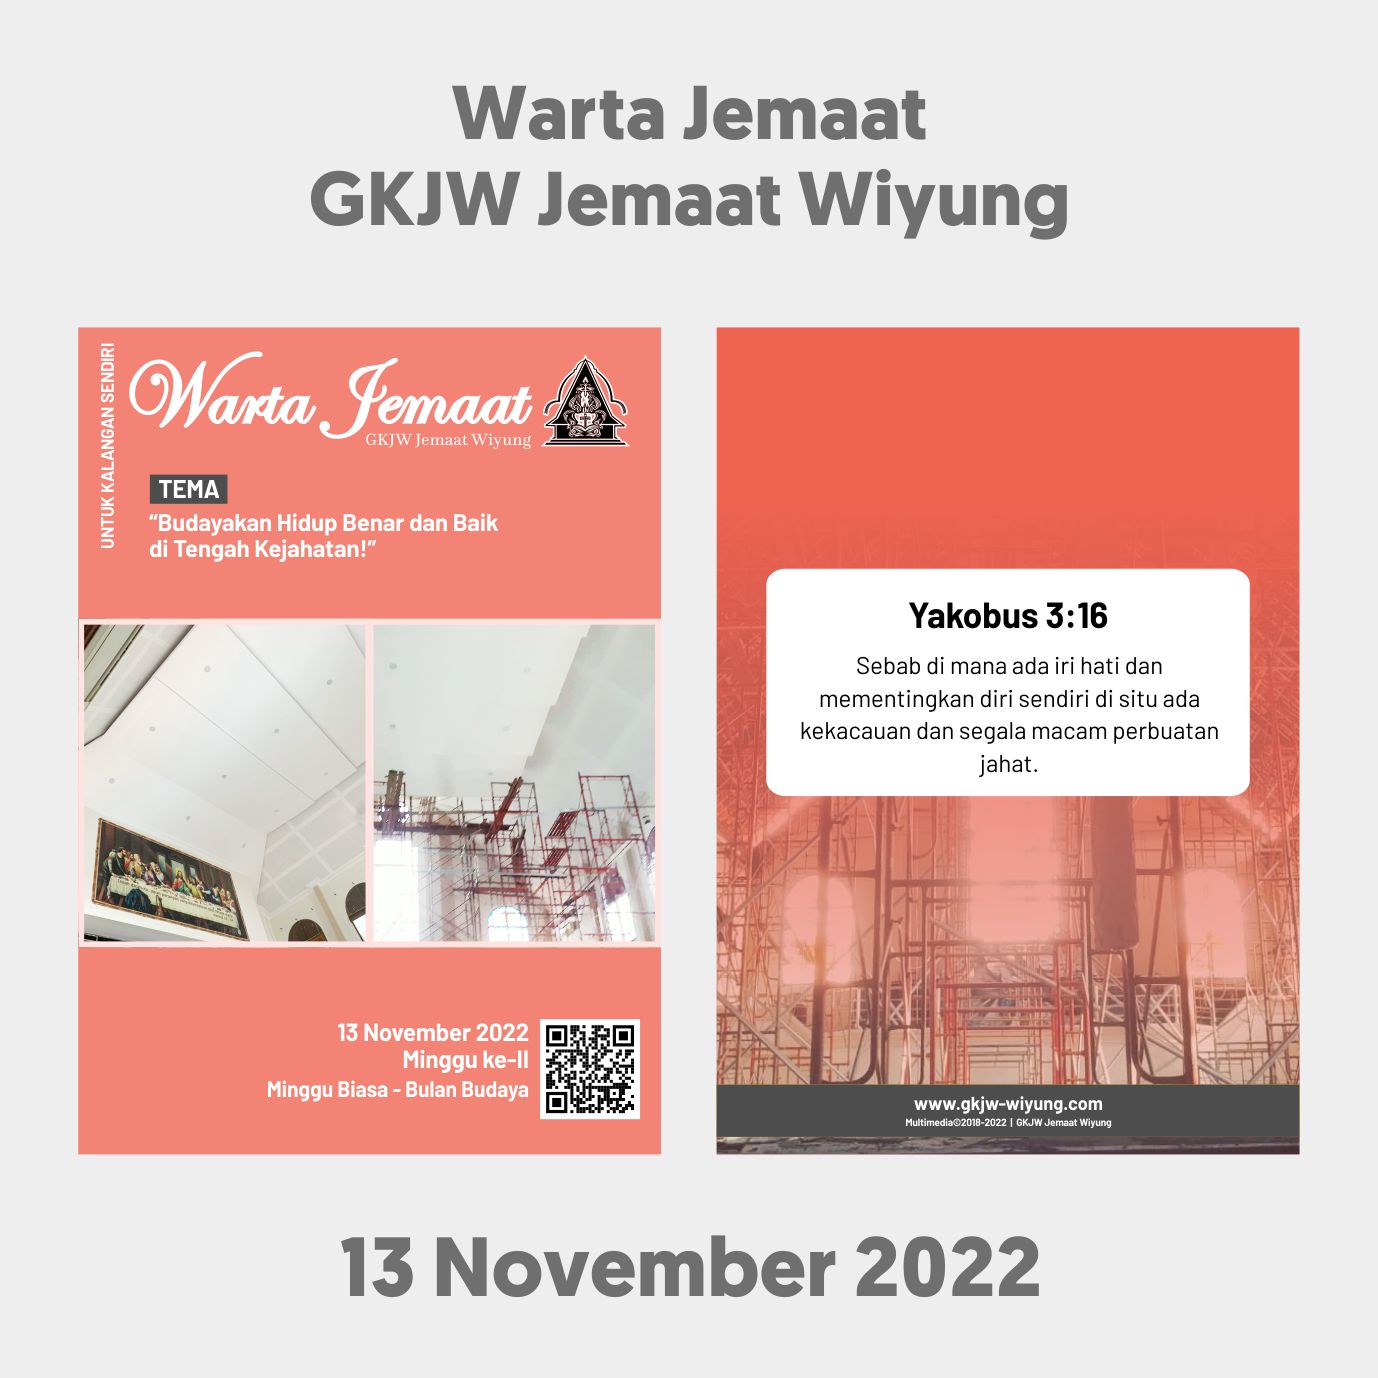 Ready go to ... https://www.gkjw-wiyung.com/warta-jemaat/warta-jemaat-13-november-2022/ [ Warta Jemaat – 13 November 2022]